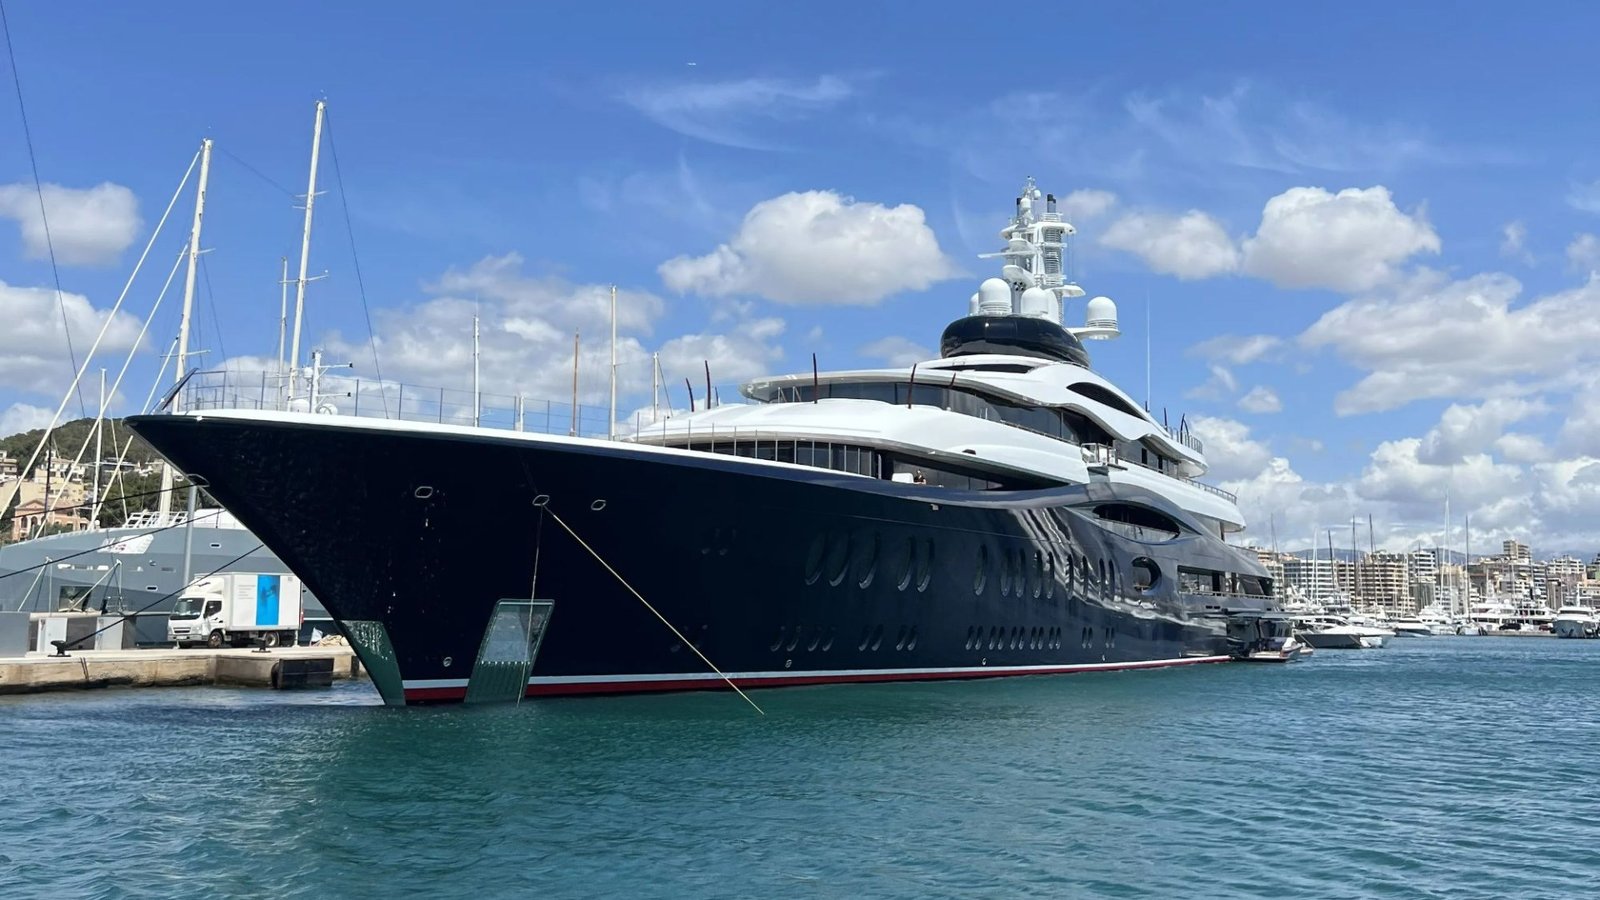 New vid shows Facebook billionaire Mark Zuckerberg’s $300m ‘birthday gift’ superyacht loom over boats in Majorca marina